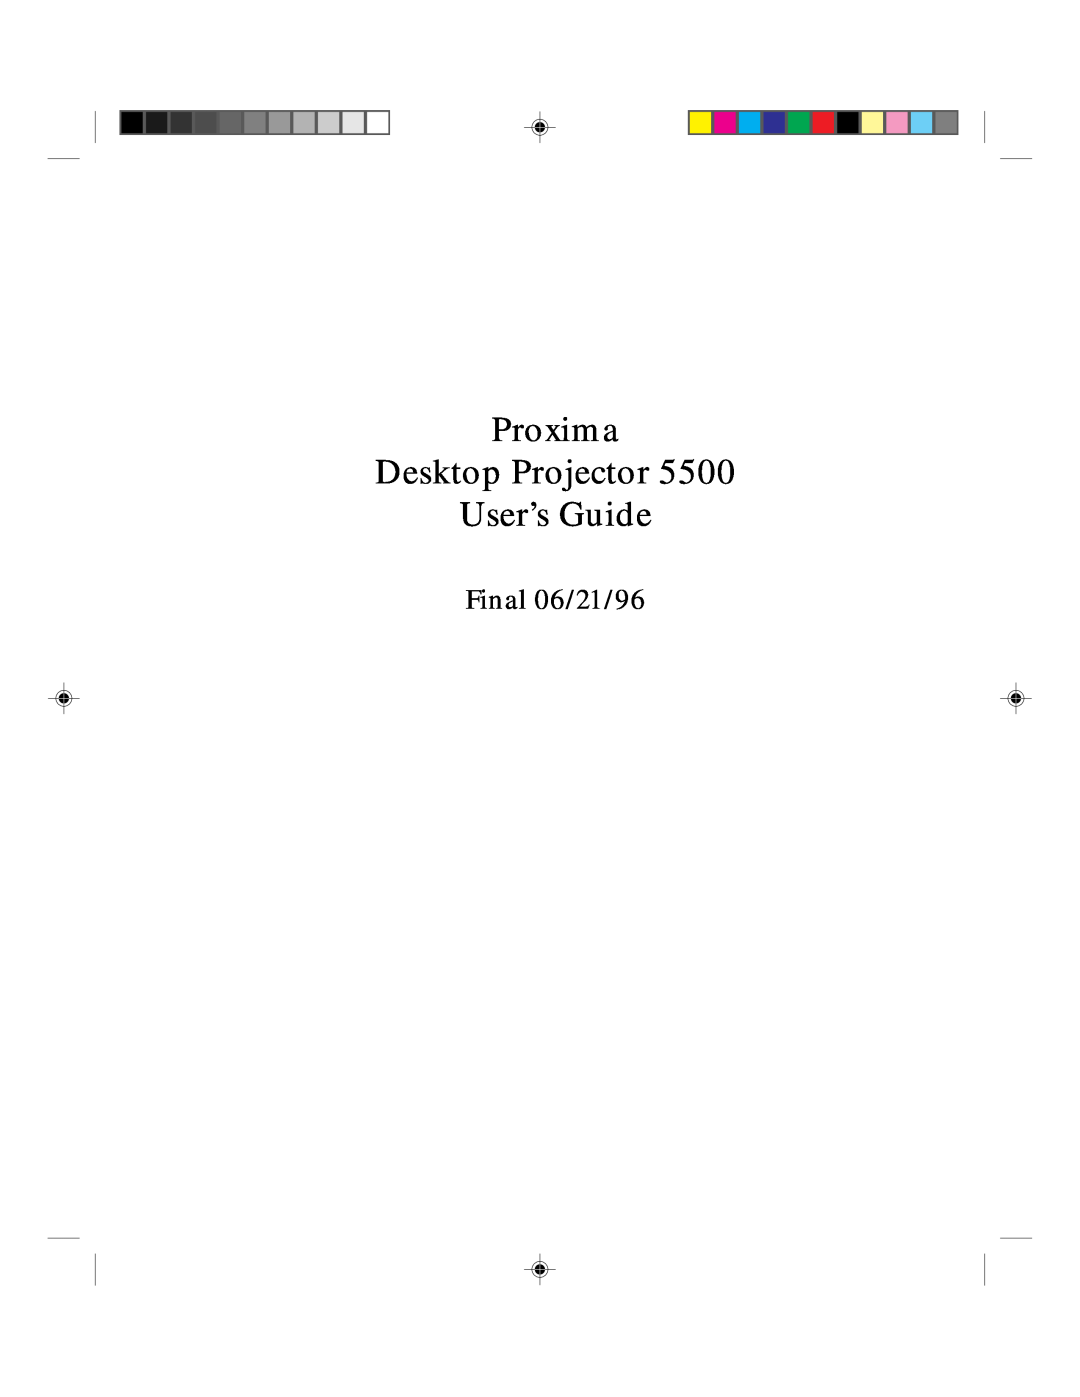 Proxima ASA DP5500 manual Proxima Desktop Projector User’s Guide, Final 06/21/96 